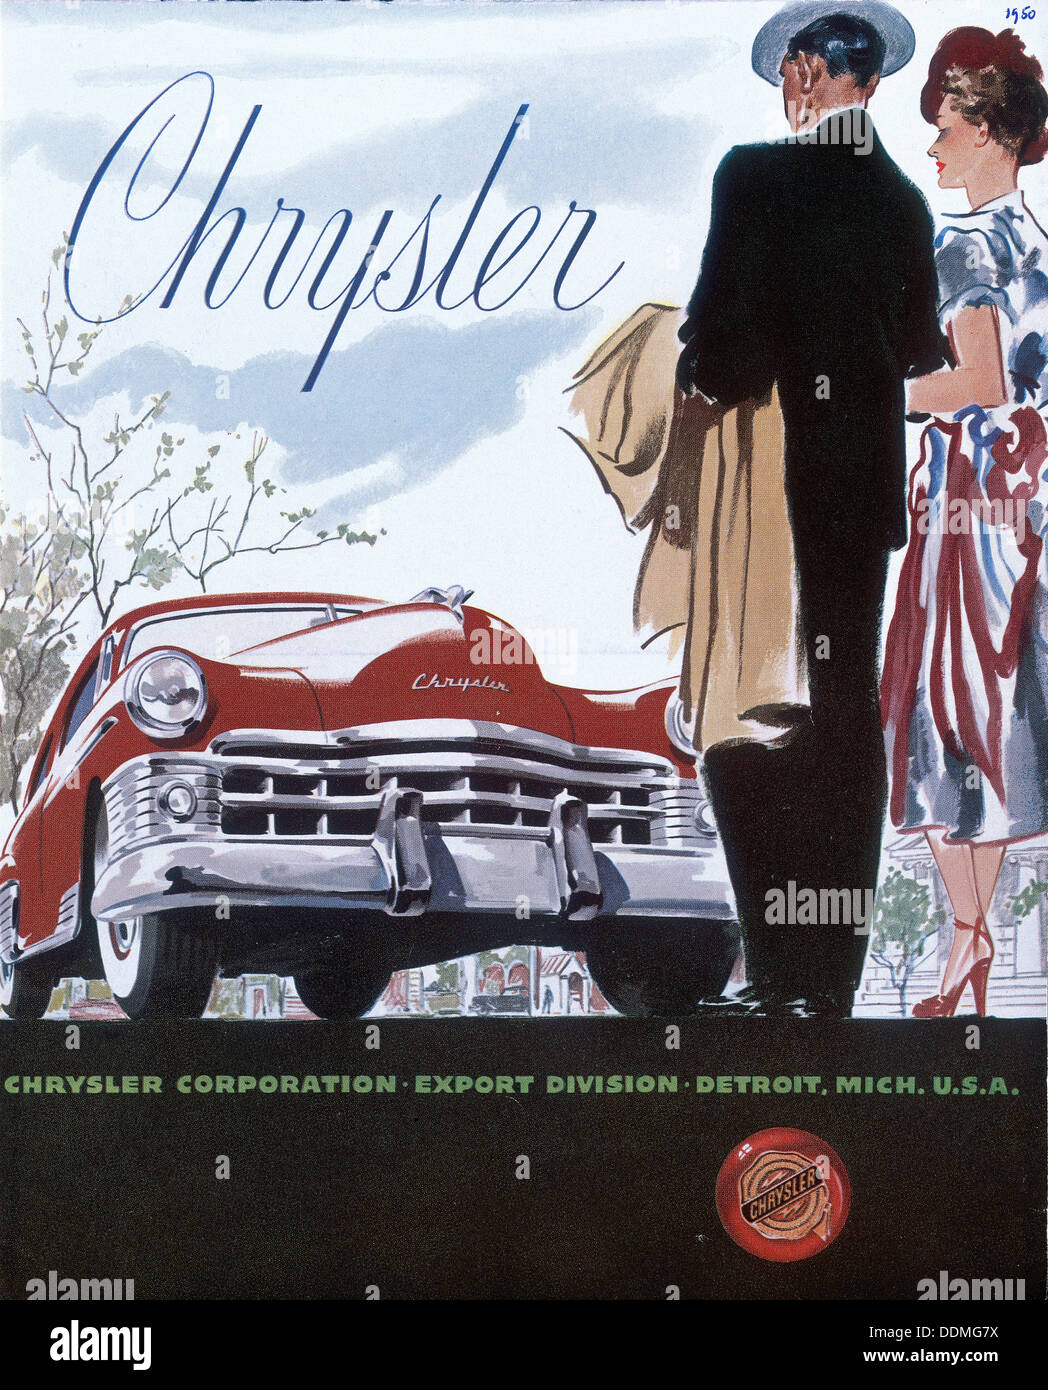 1950s Car Chrysler Stock Photos & 1950s Car Chrysler Stock ...